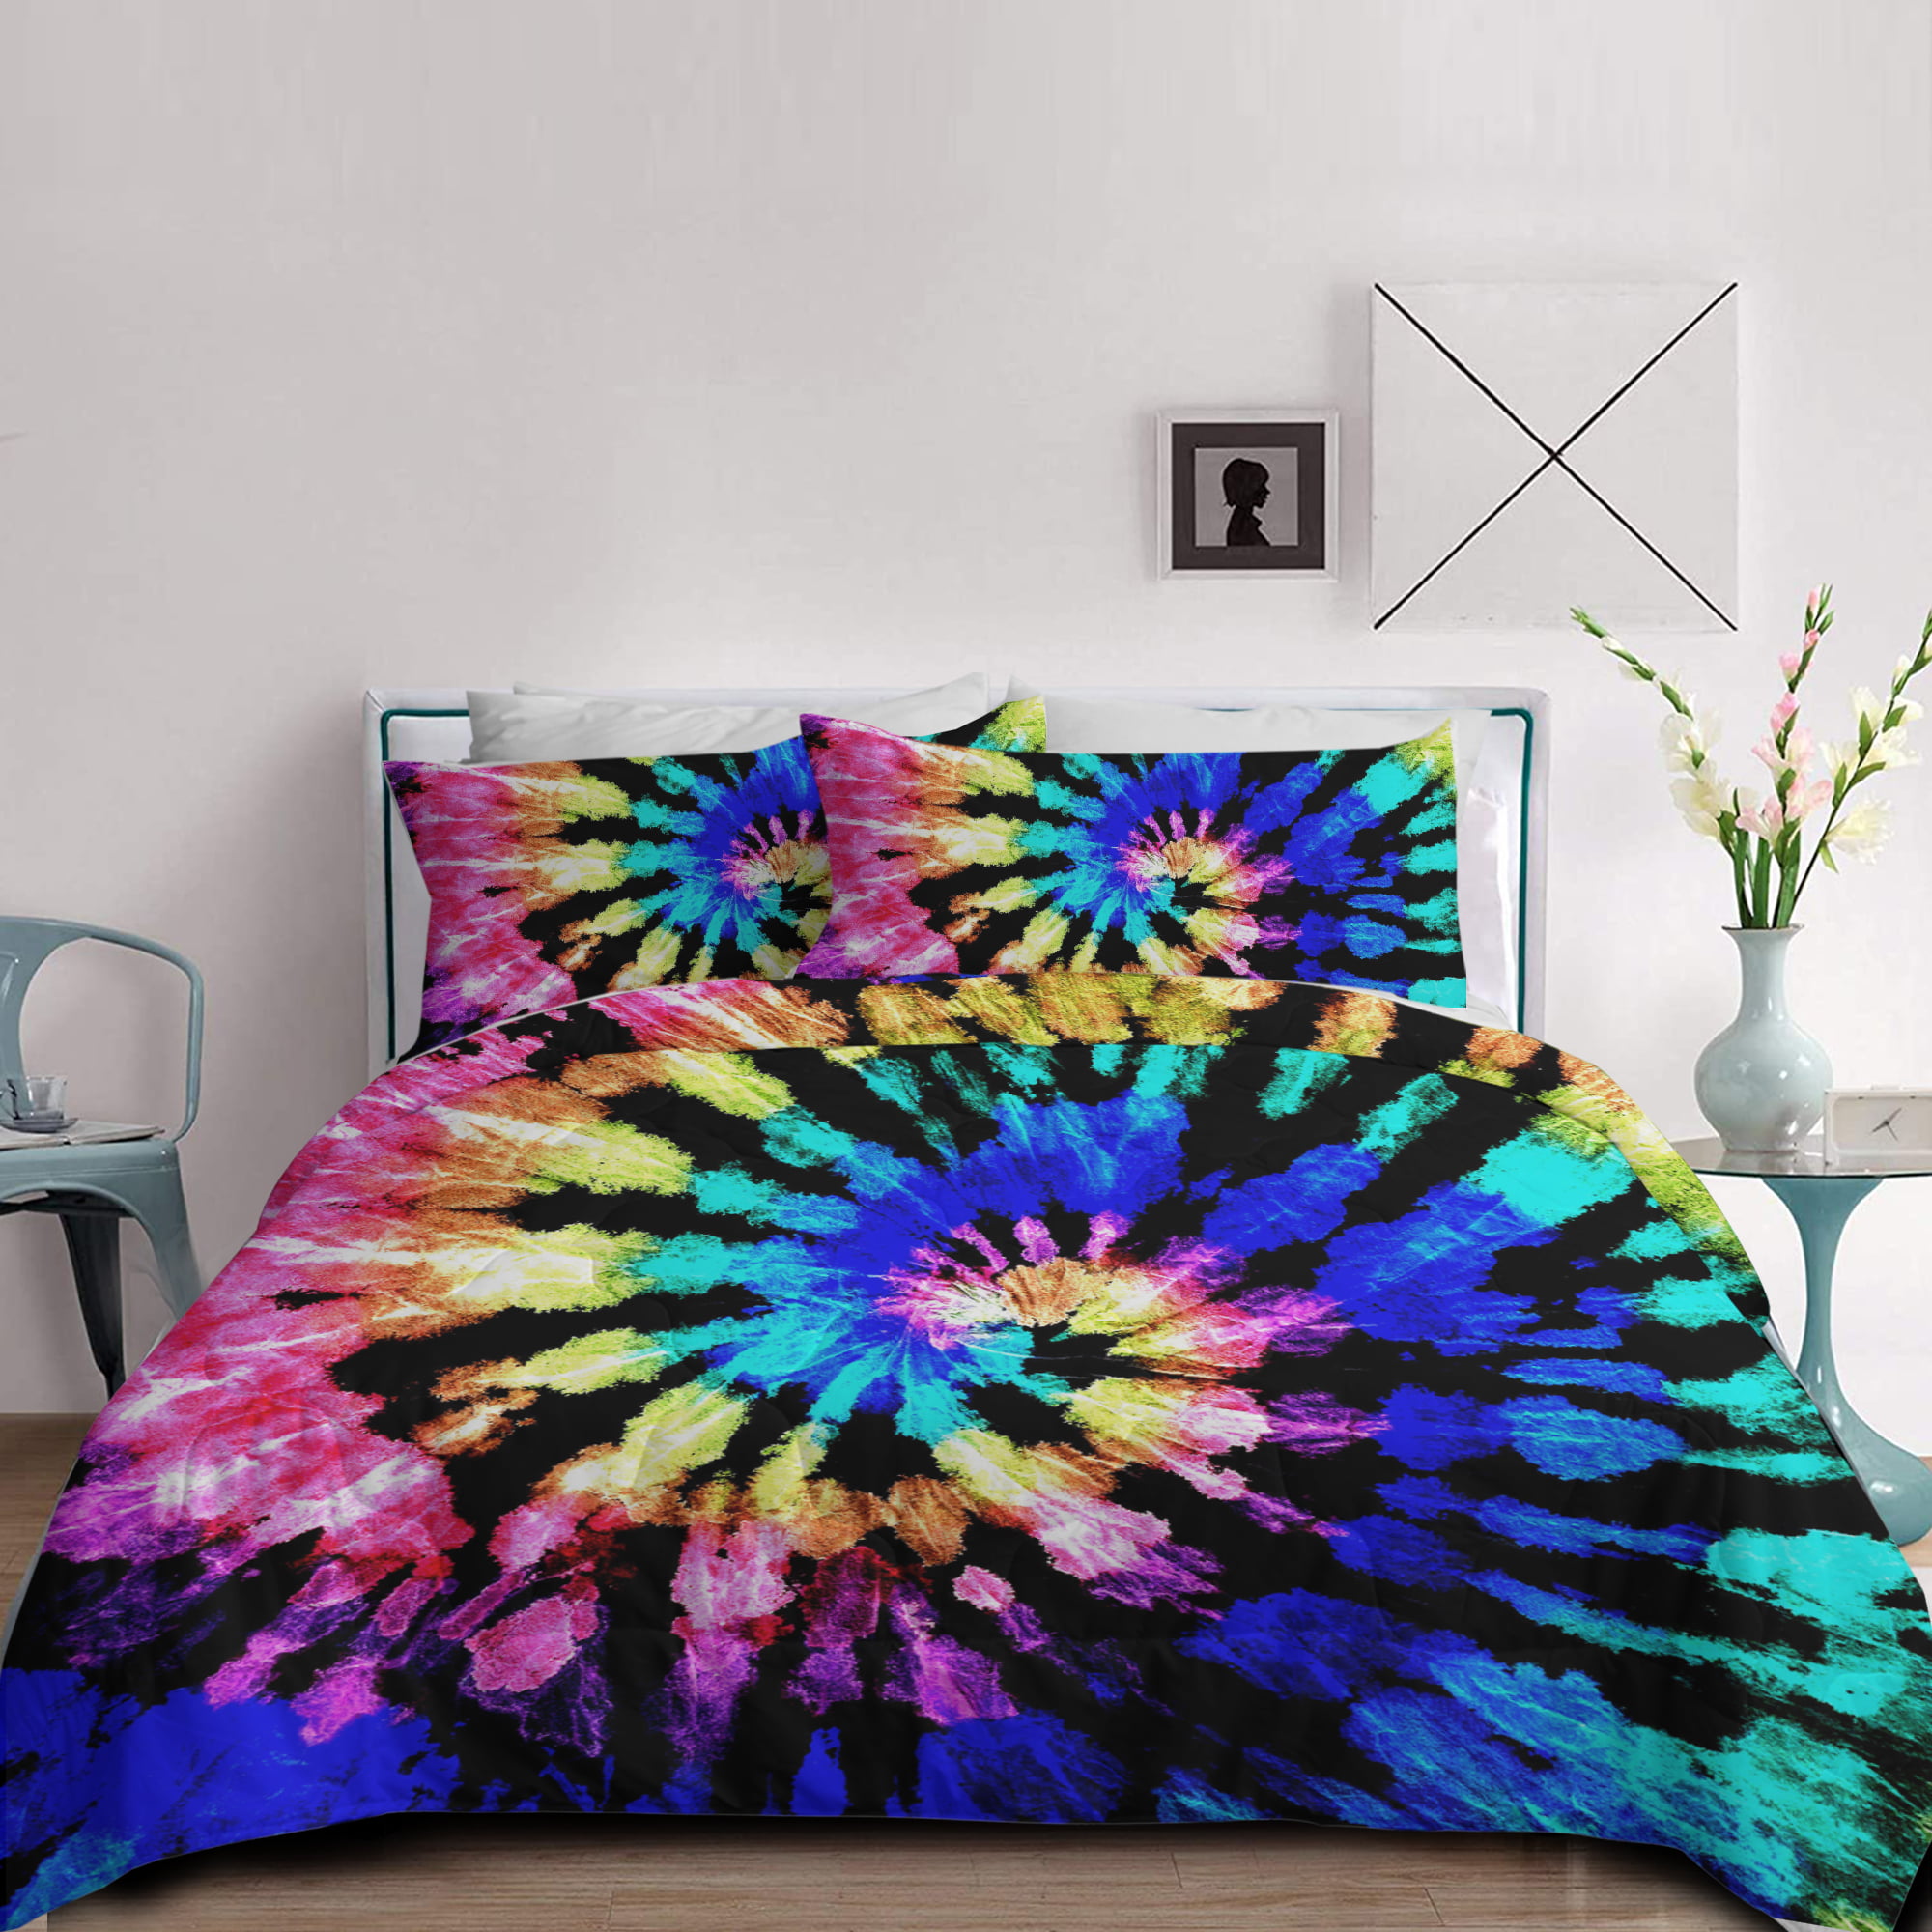 BlessLiving 3 Piece Tie Dye Comforter Set with Pillow Shams Trippy Bedding Hippi 